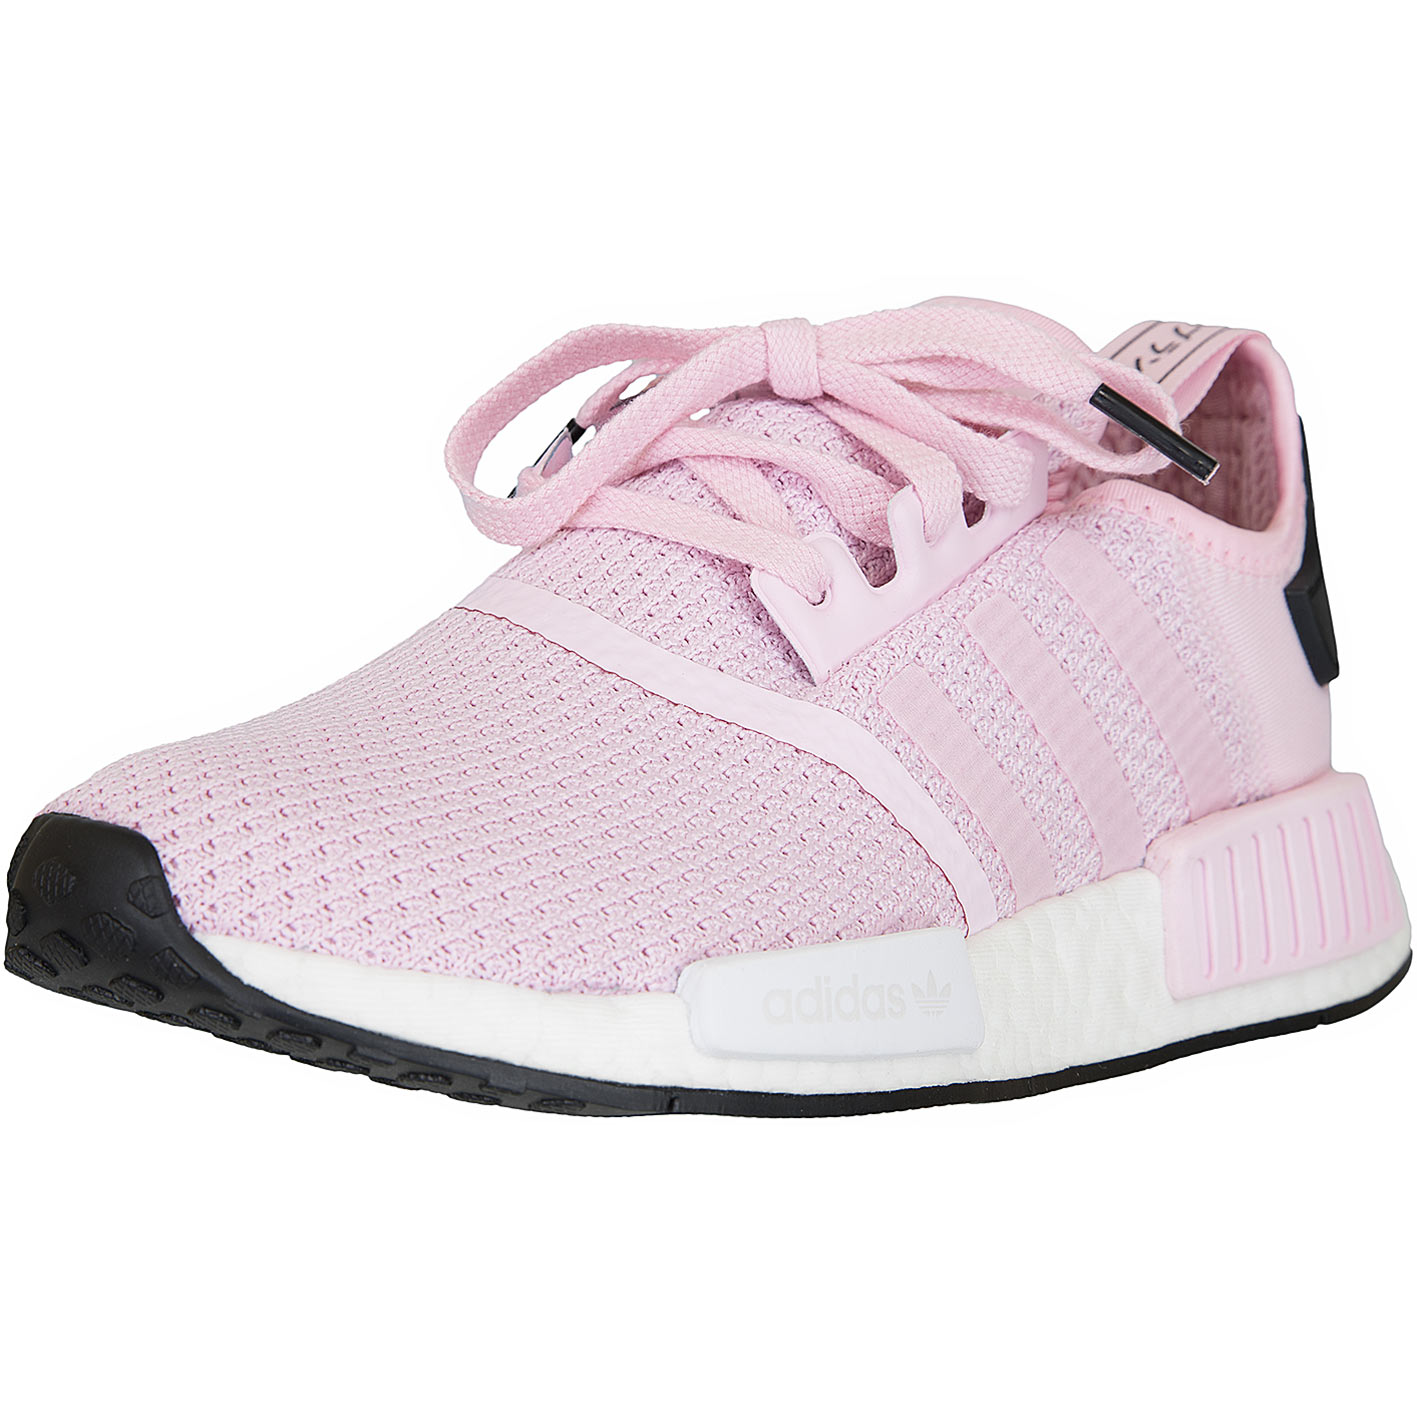 ☆ Adidas Originals Damen Sneaker NMD R1 pink - hier bestellen!